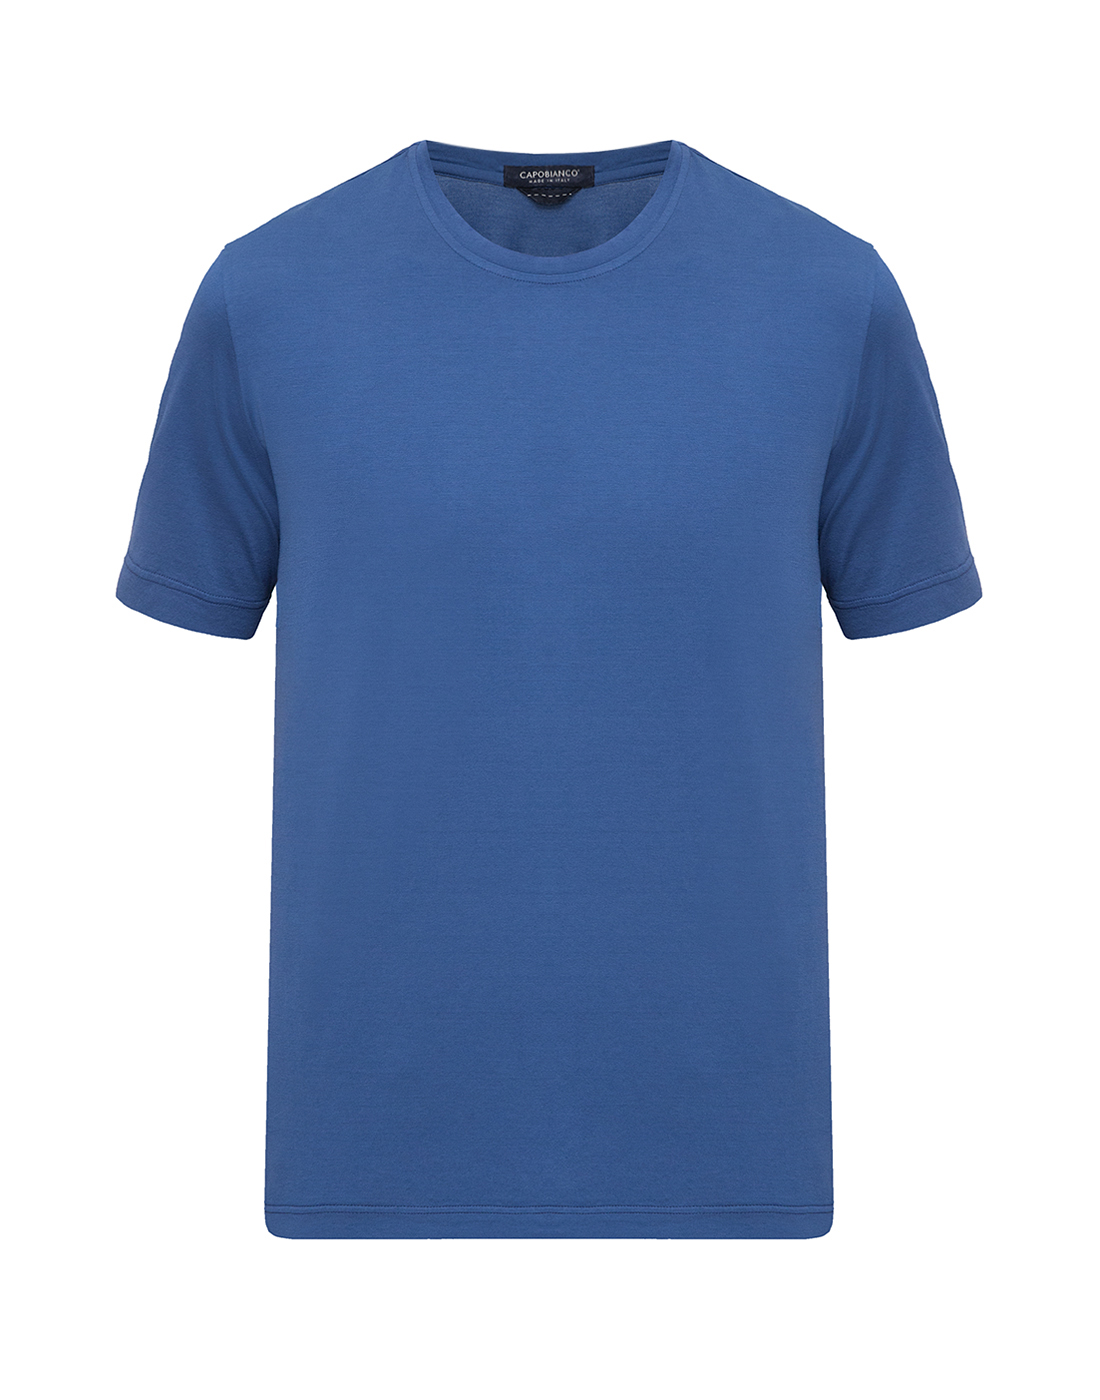 Мужская синяя футболка Capobianco S8M660.AL01. TOPAZIO-1